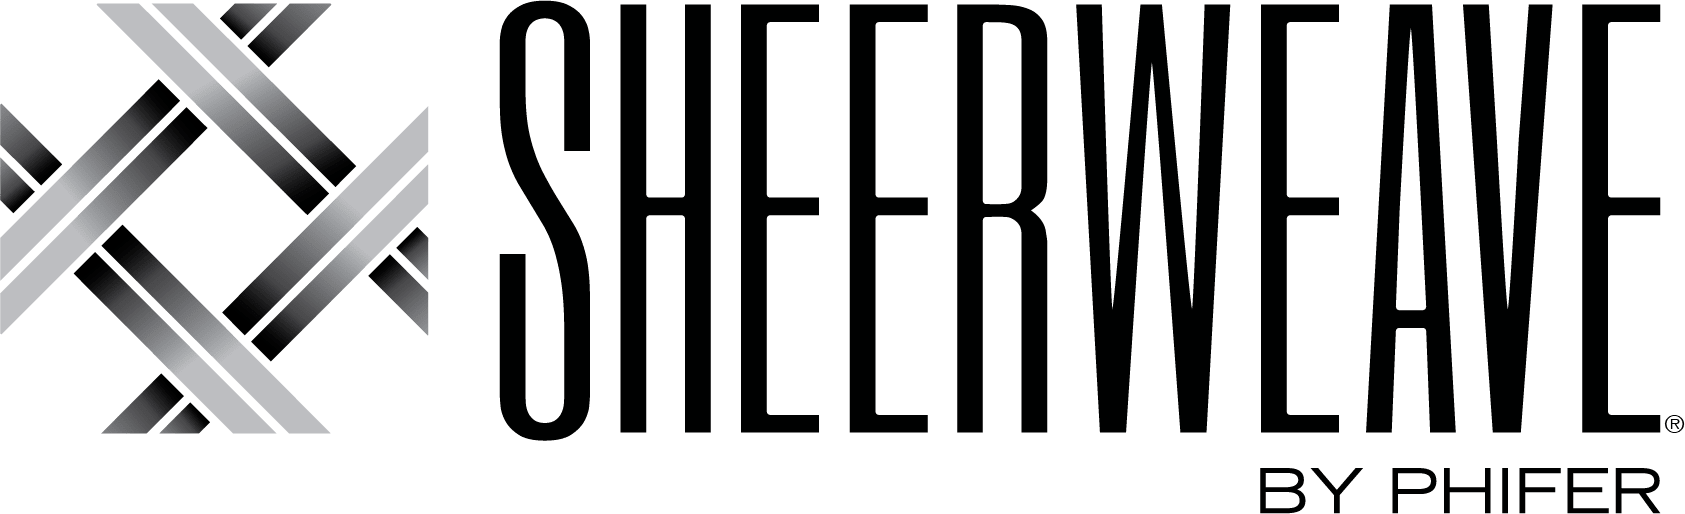 SheerWeave Logo V1.0